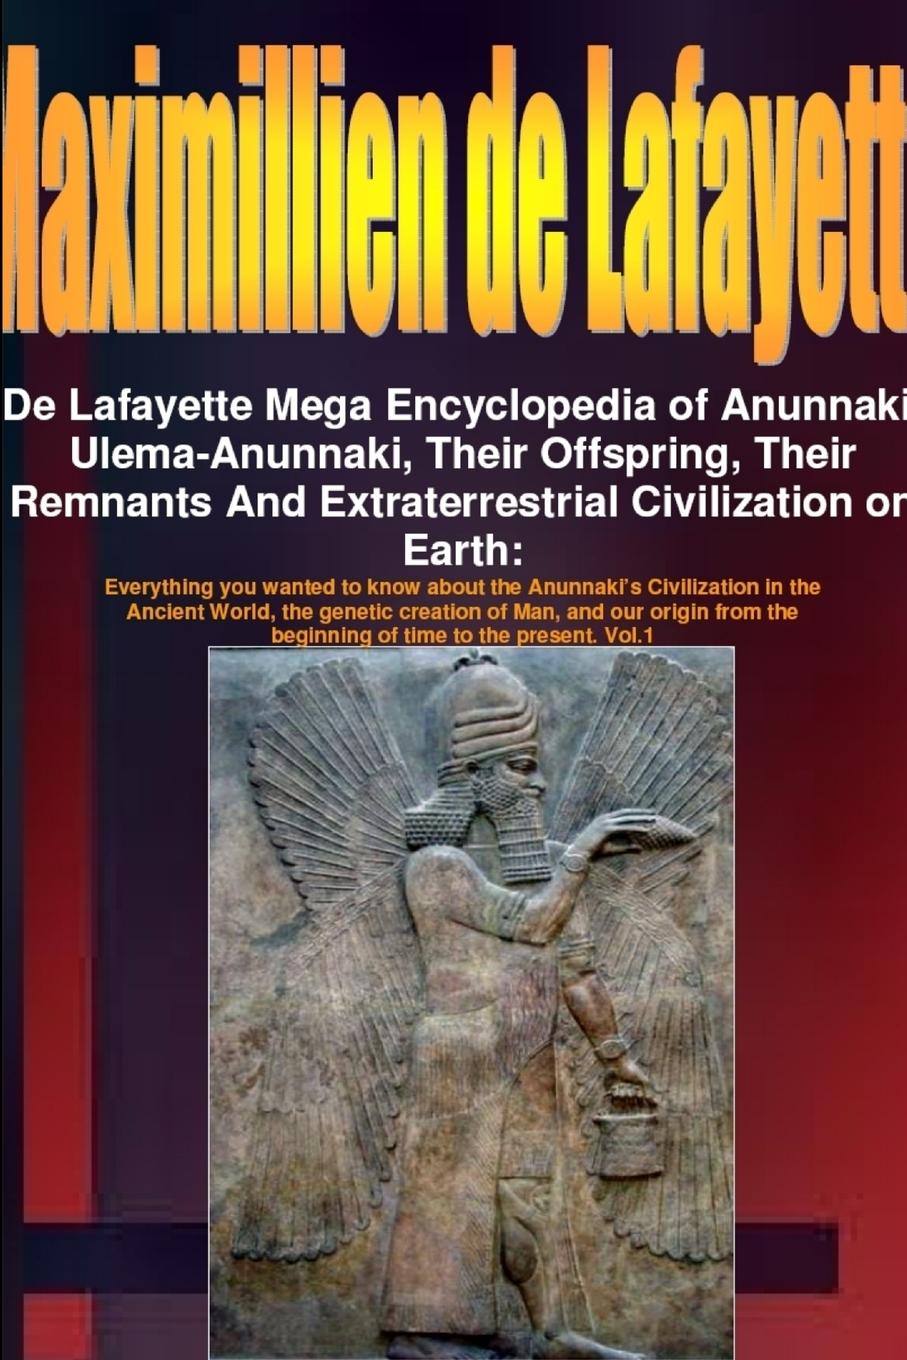 Carte De Lafayette Mega Encyclopedia of Anunnaki, Ulema-Anunnaki, Their Offspring, Their Remnants And Extraterrestrial Civilization on Earth Maximillien De Lafayette